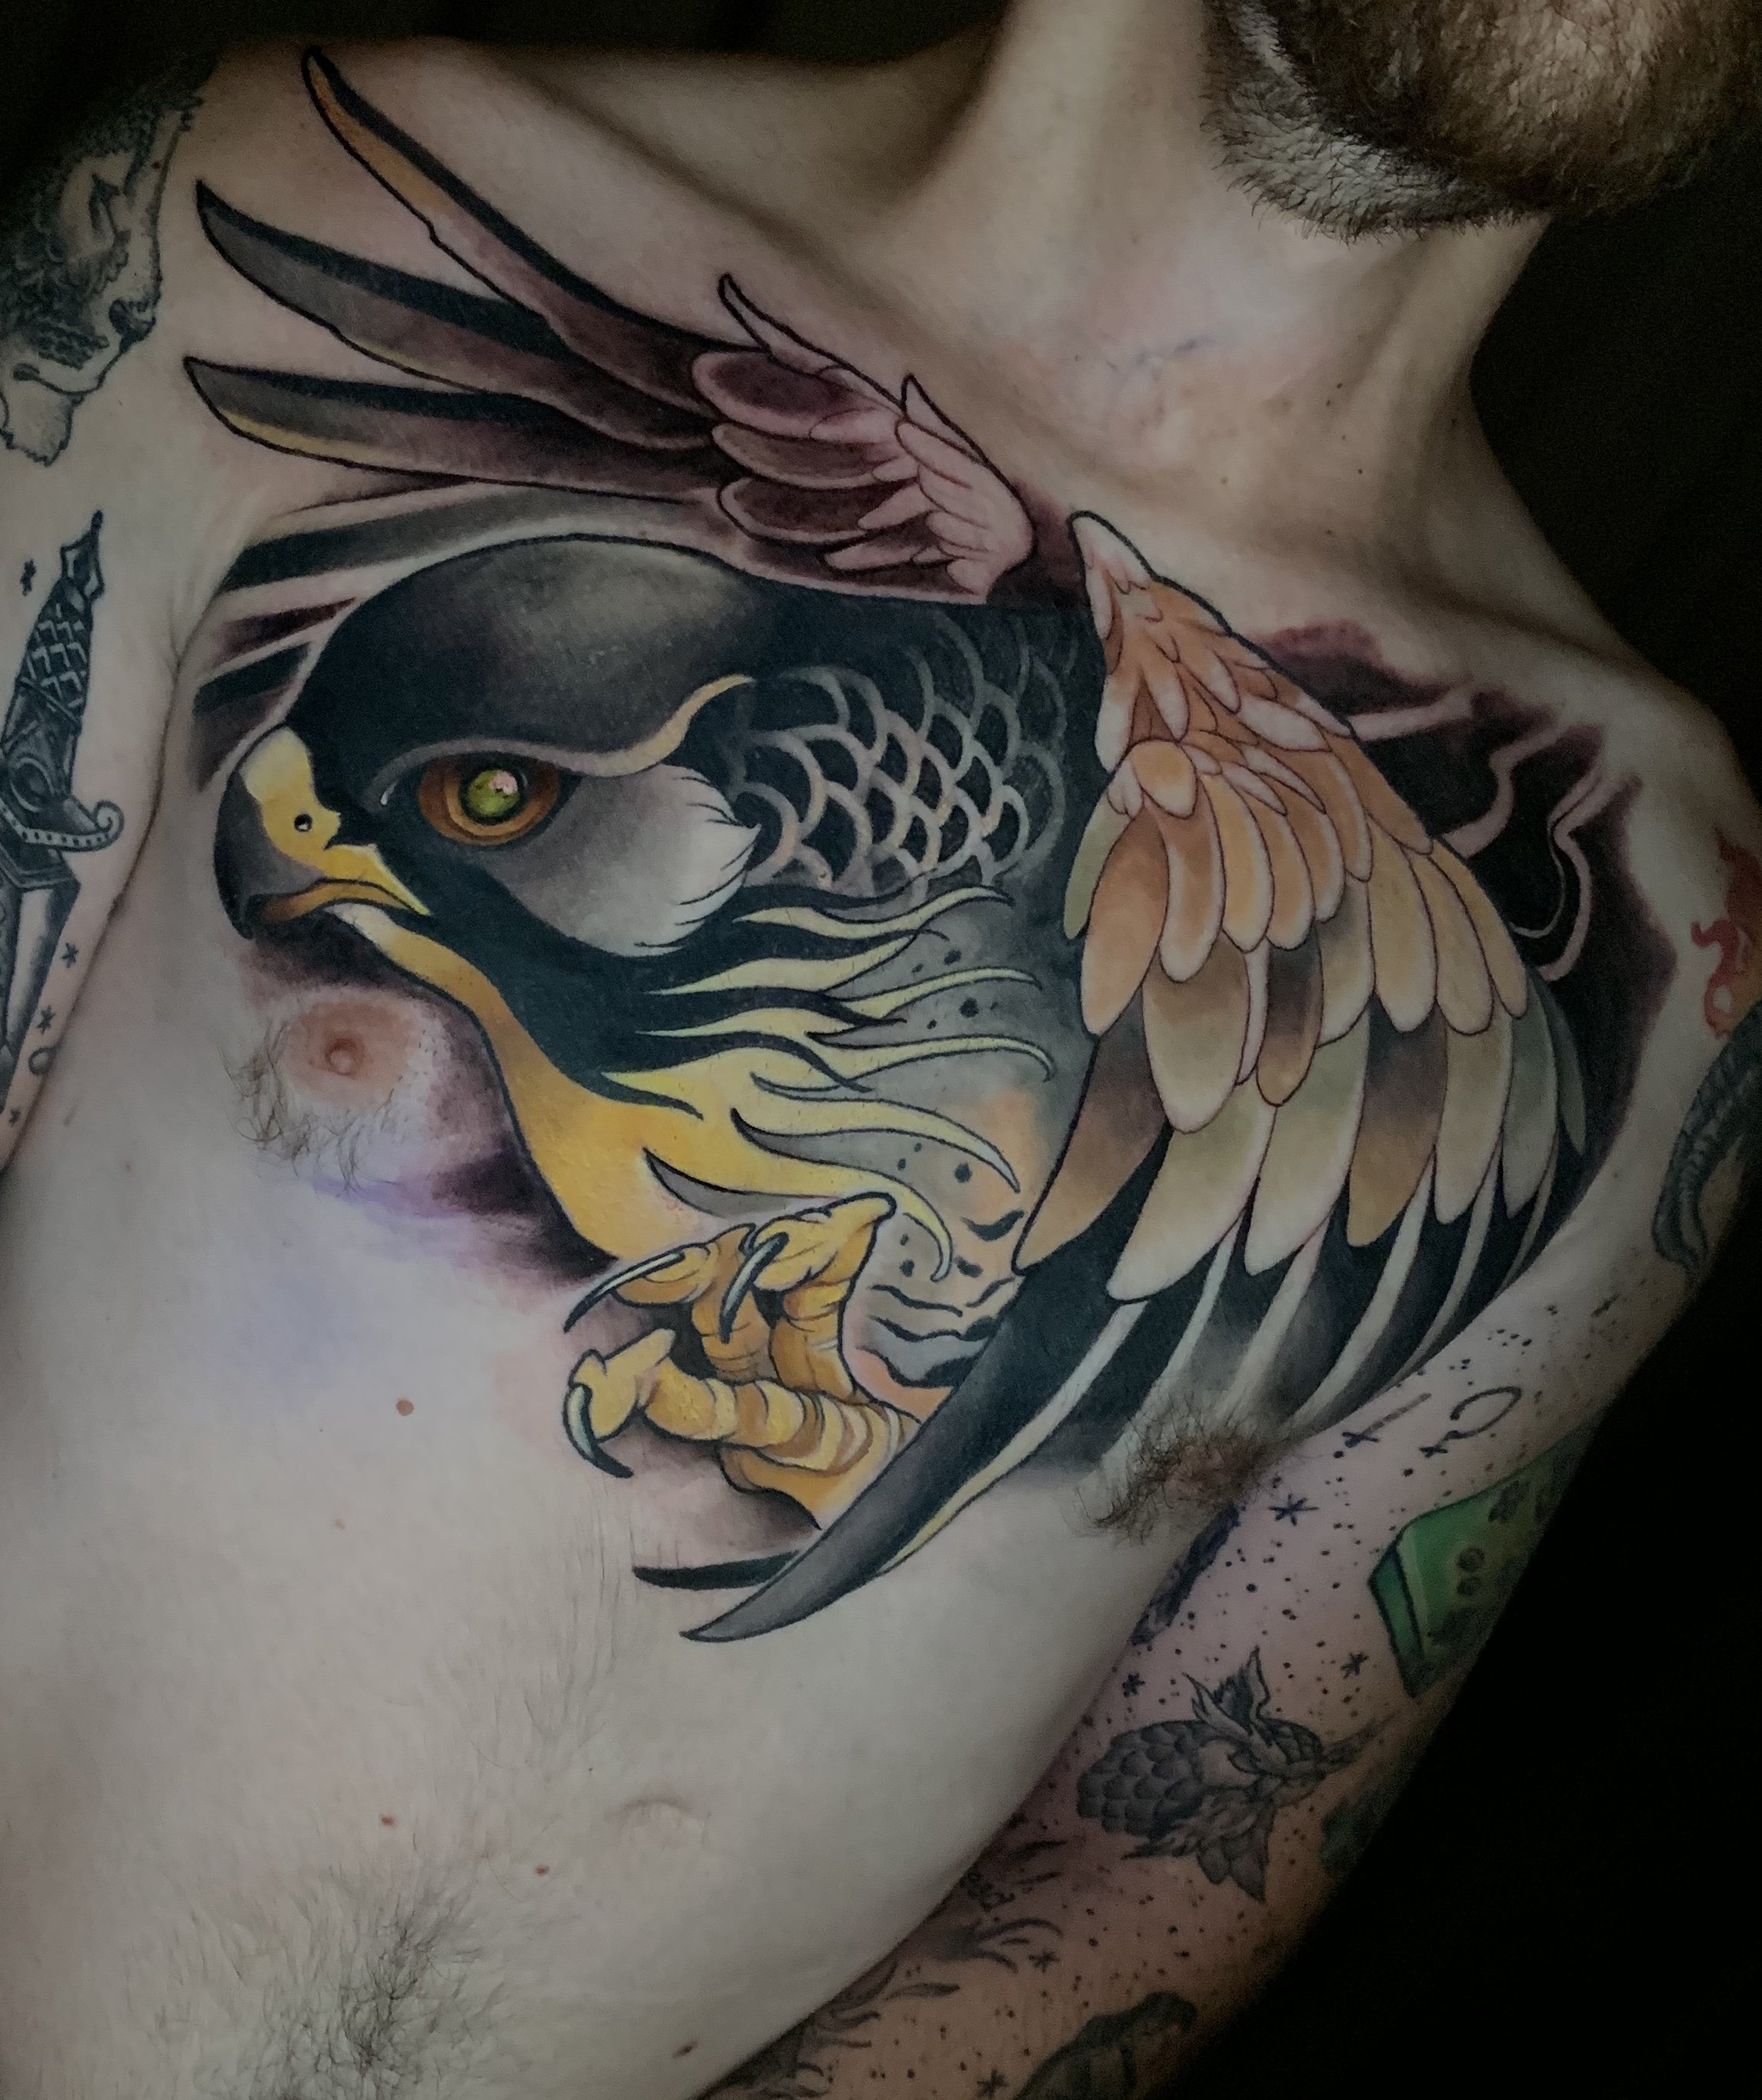 Tattoo tagged with neotrad eagle head  inkedappcom